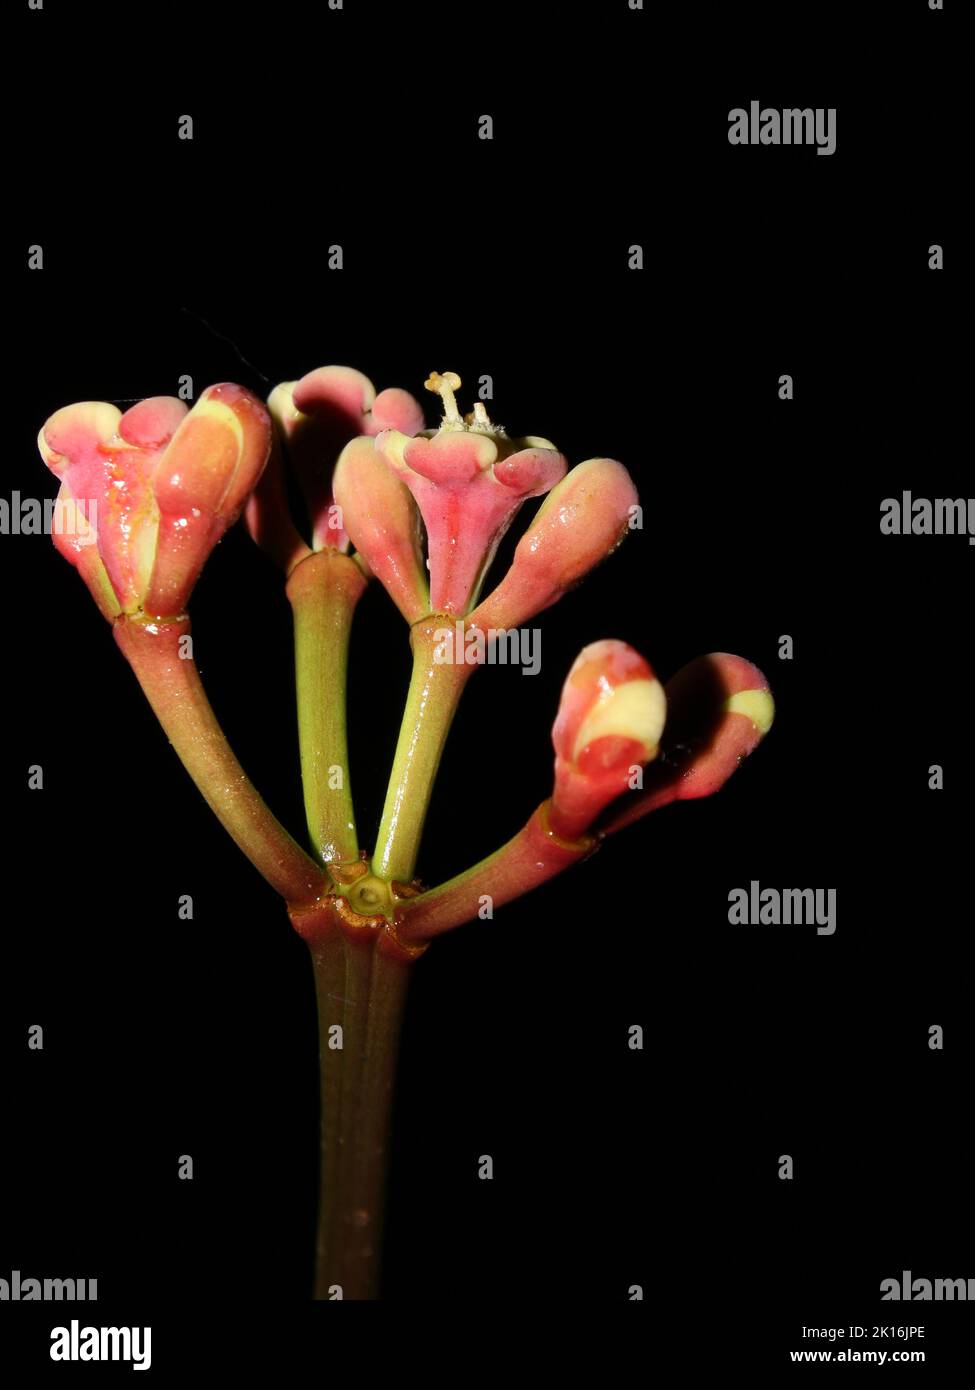 Isolated flowers of Euphorbia sinclairiana Stock Photo